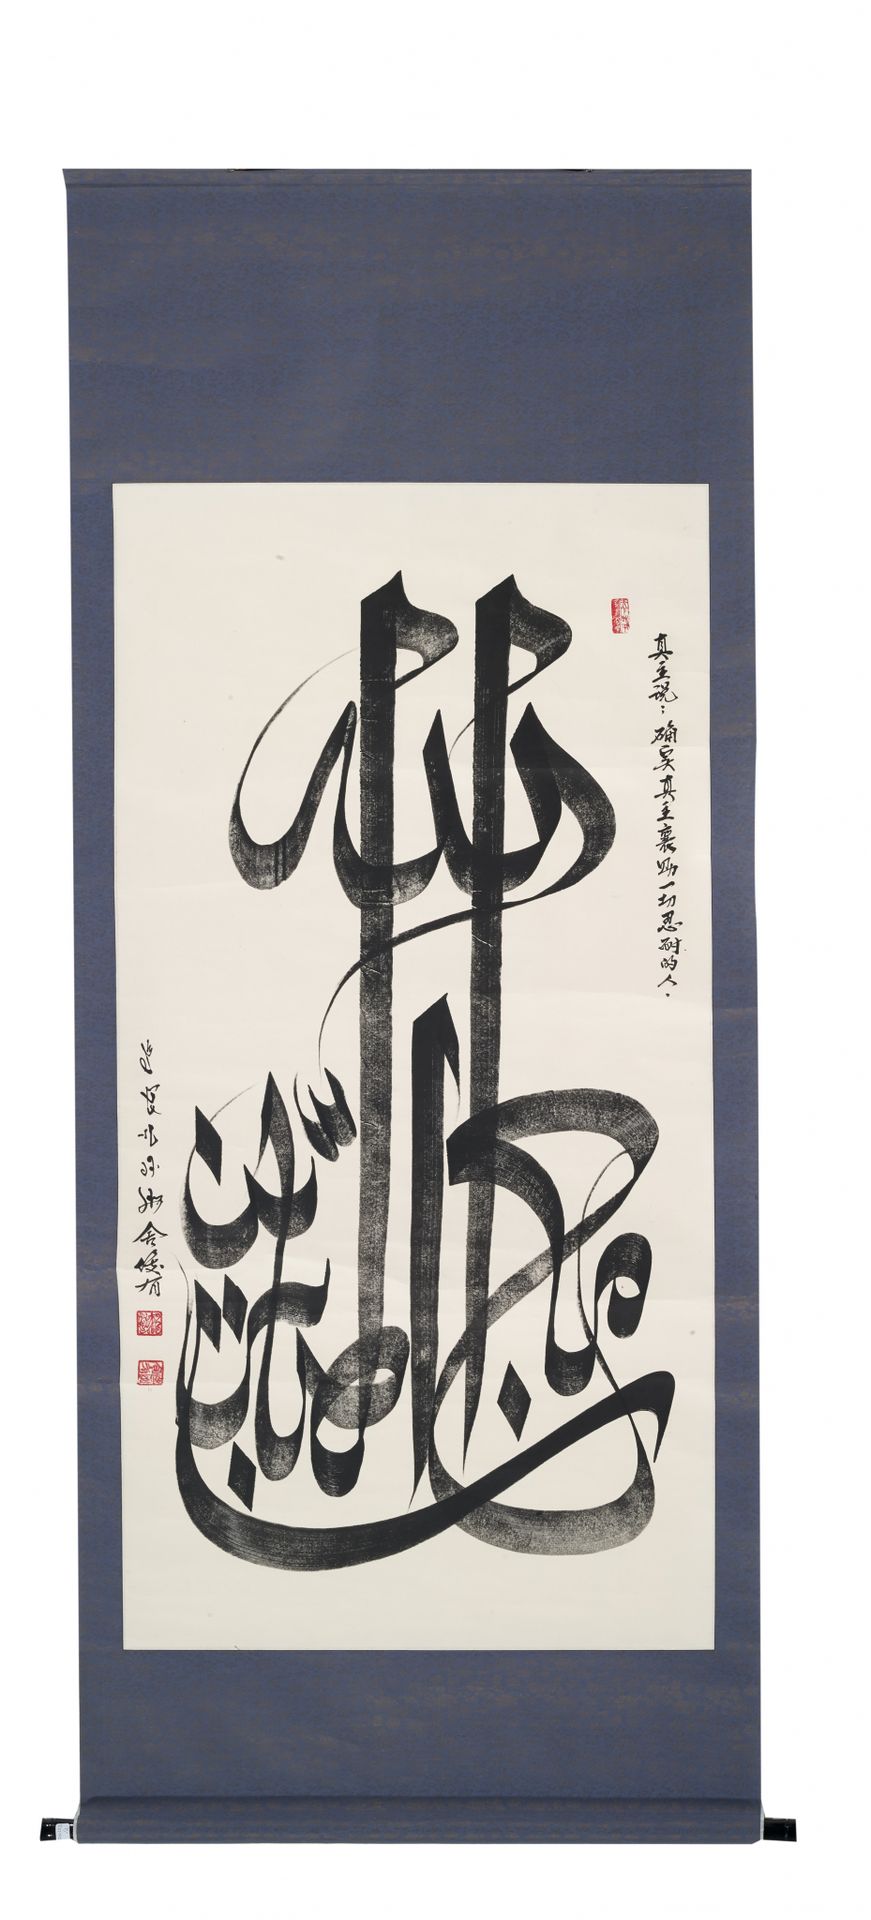 D'après Yu Jinxue China, siglo XX

Pergamino caligráfico en tinta negra en escri&hellip;